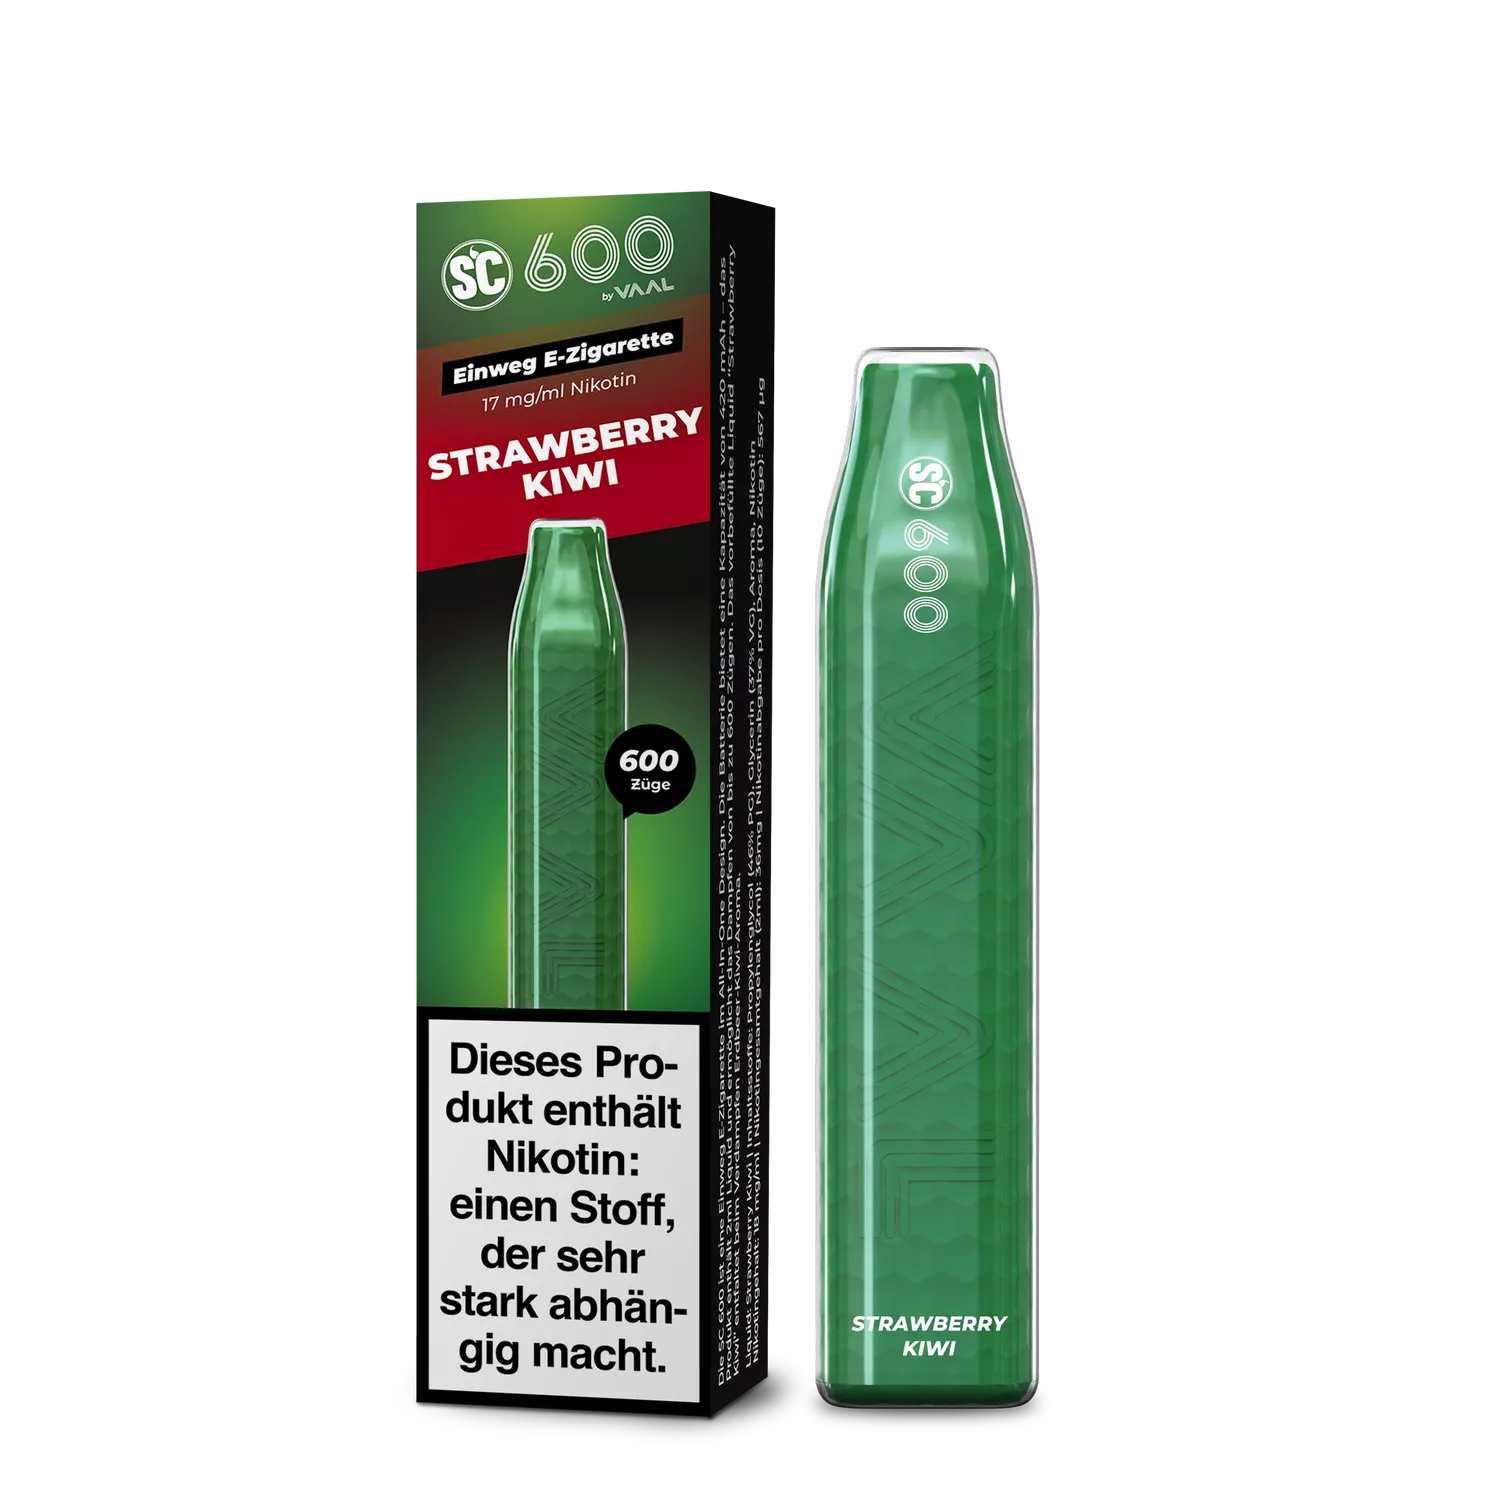 SC 600 Einweg E-Zigarette by VAAL Strawberry Kiwi 17mg/ml